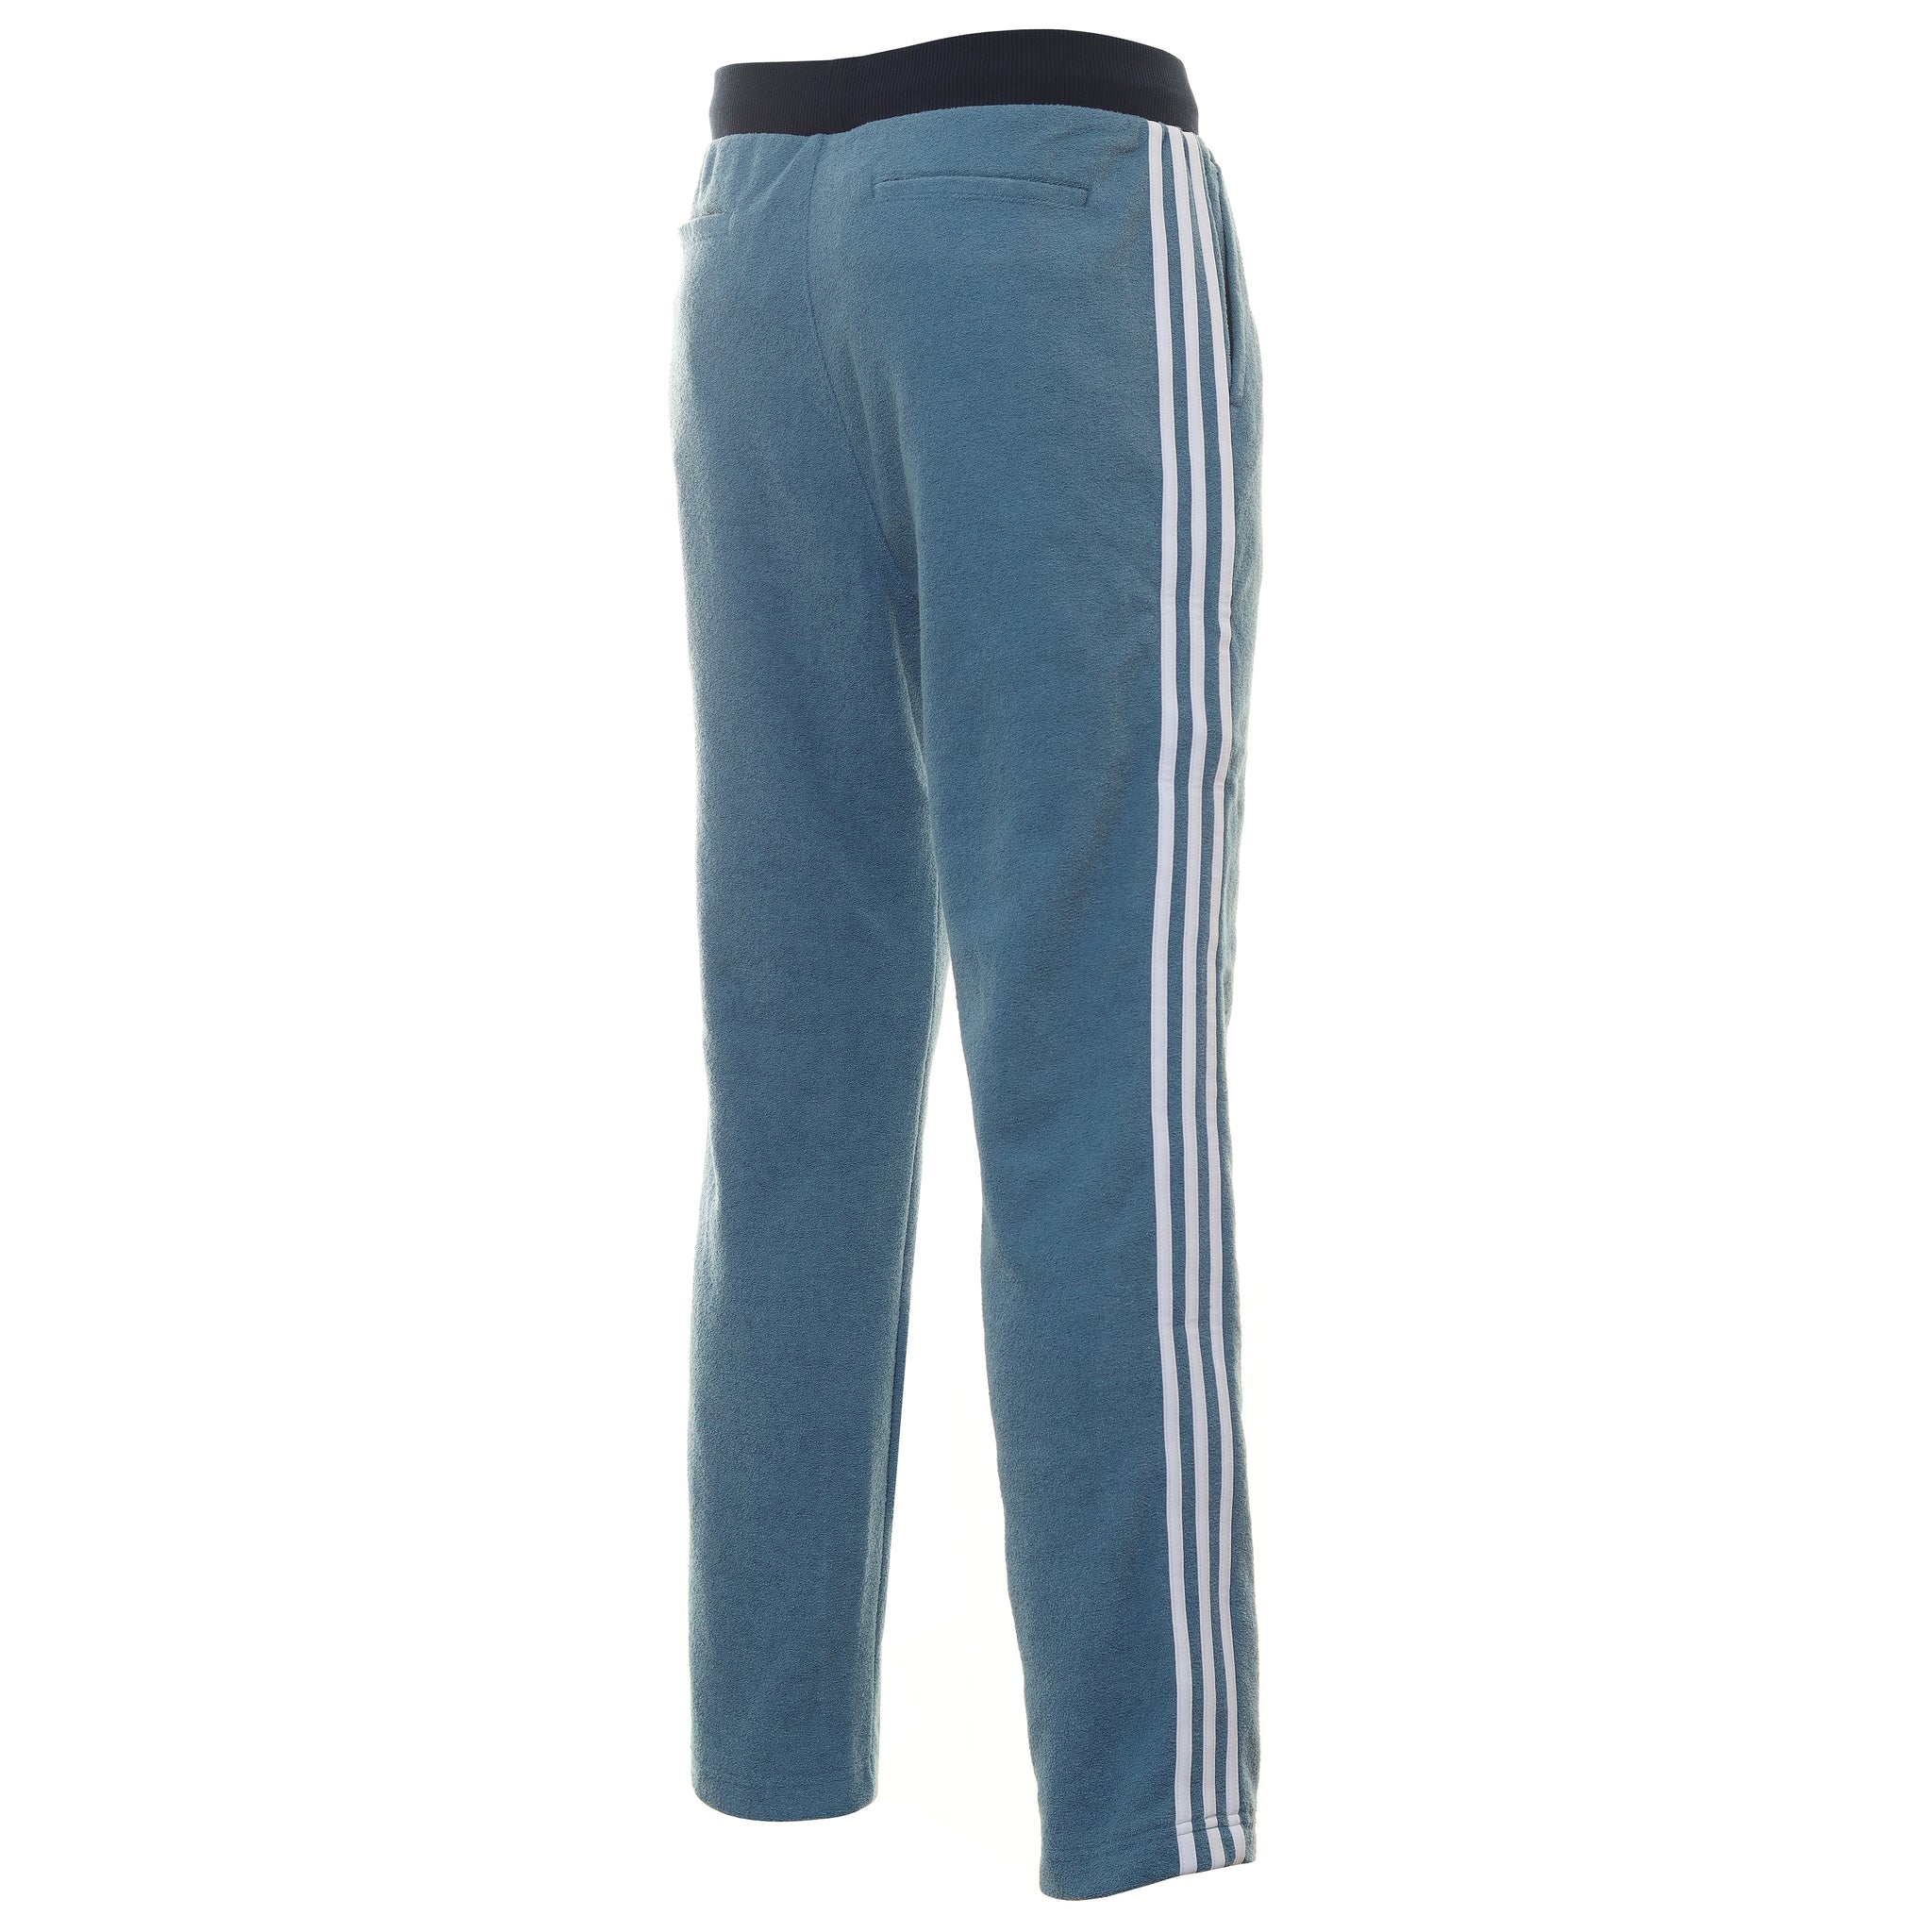 adidas-golf-x-bogey-boys-track-pants-ij3075-altered-blue